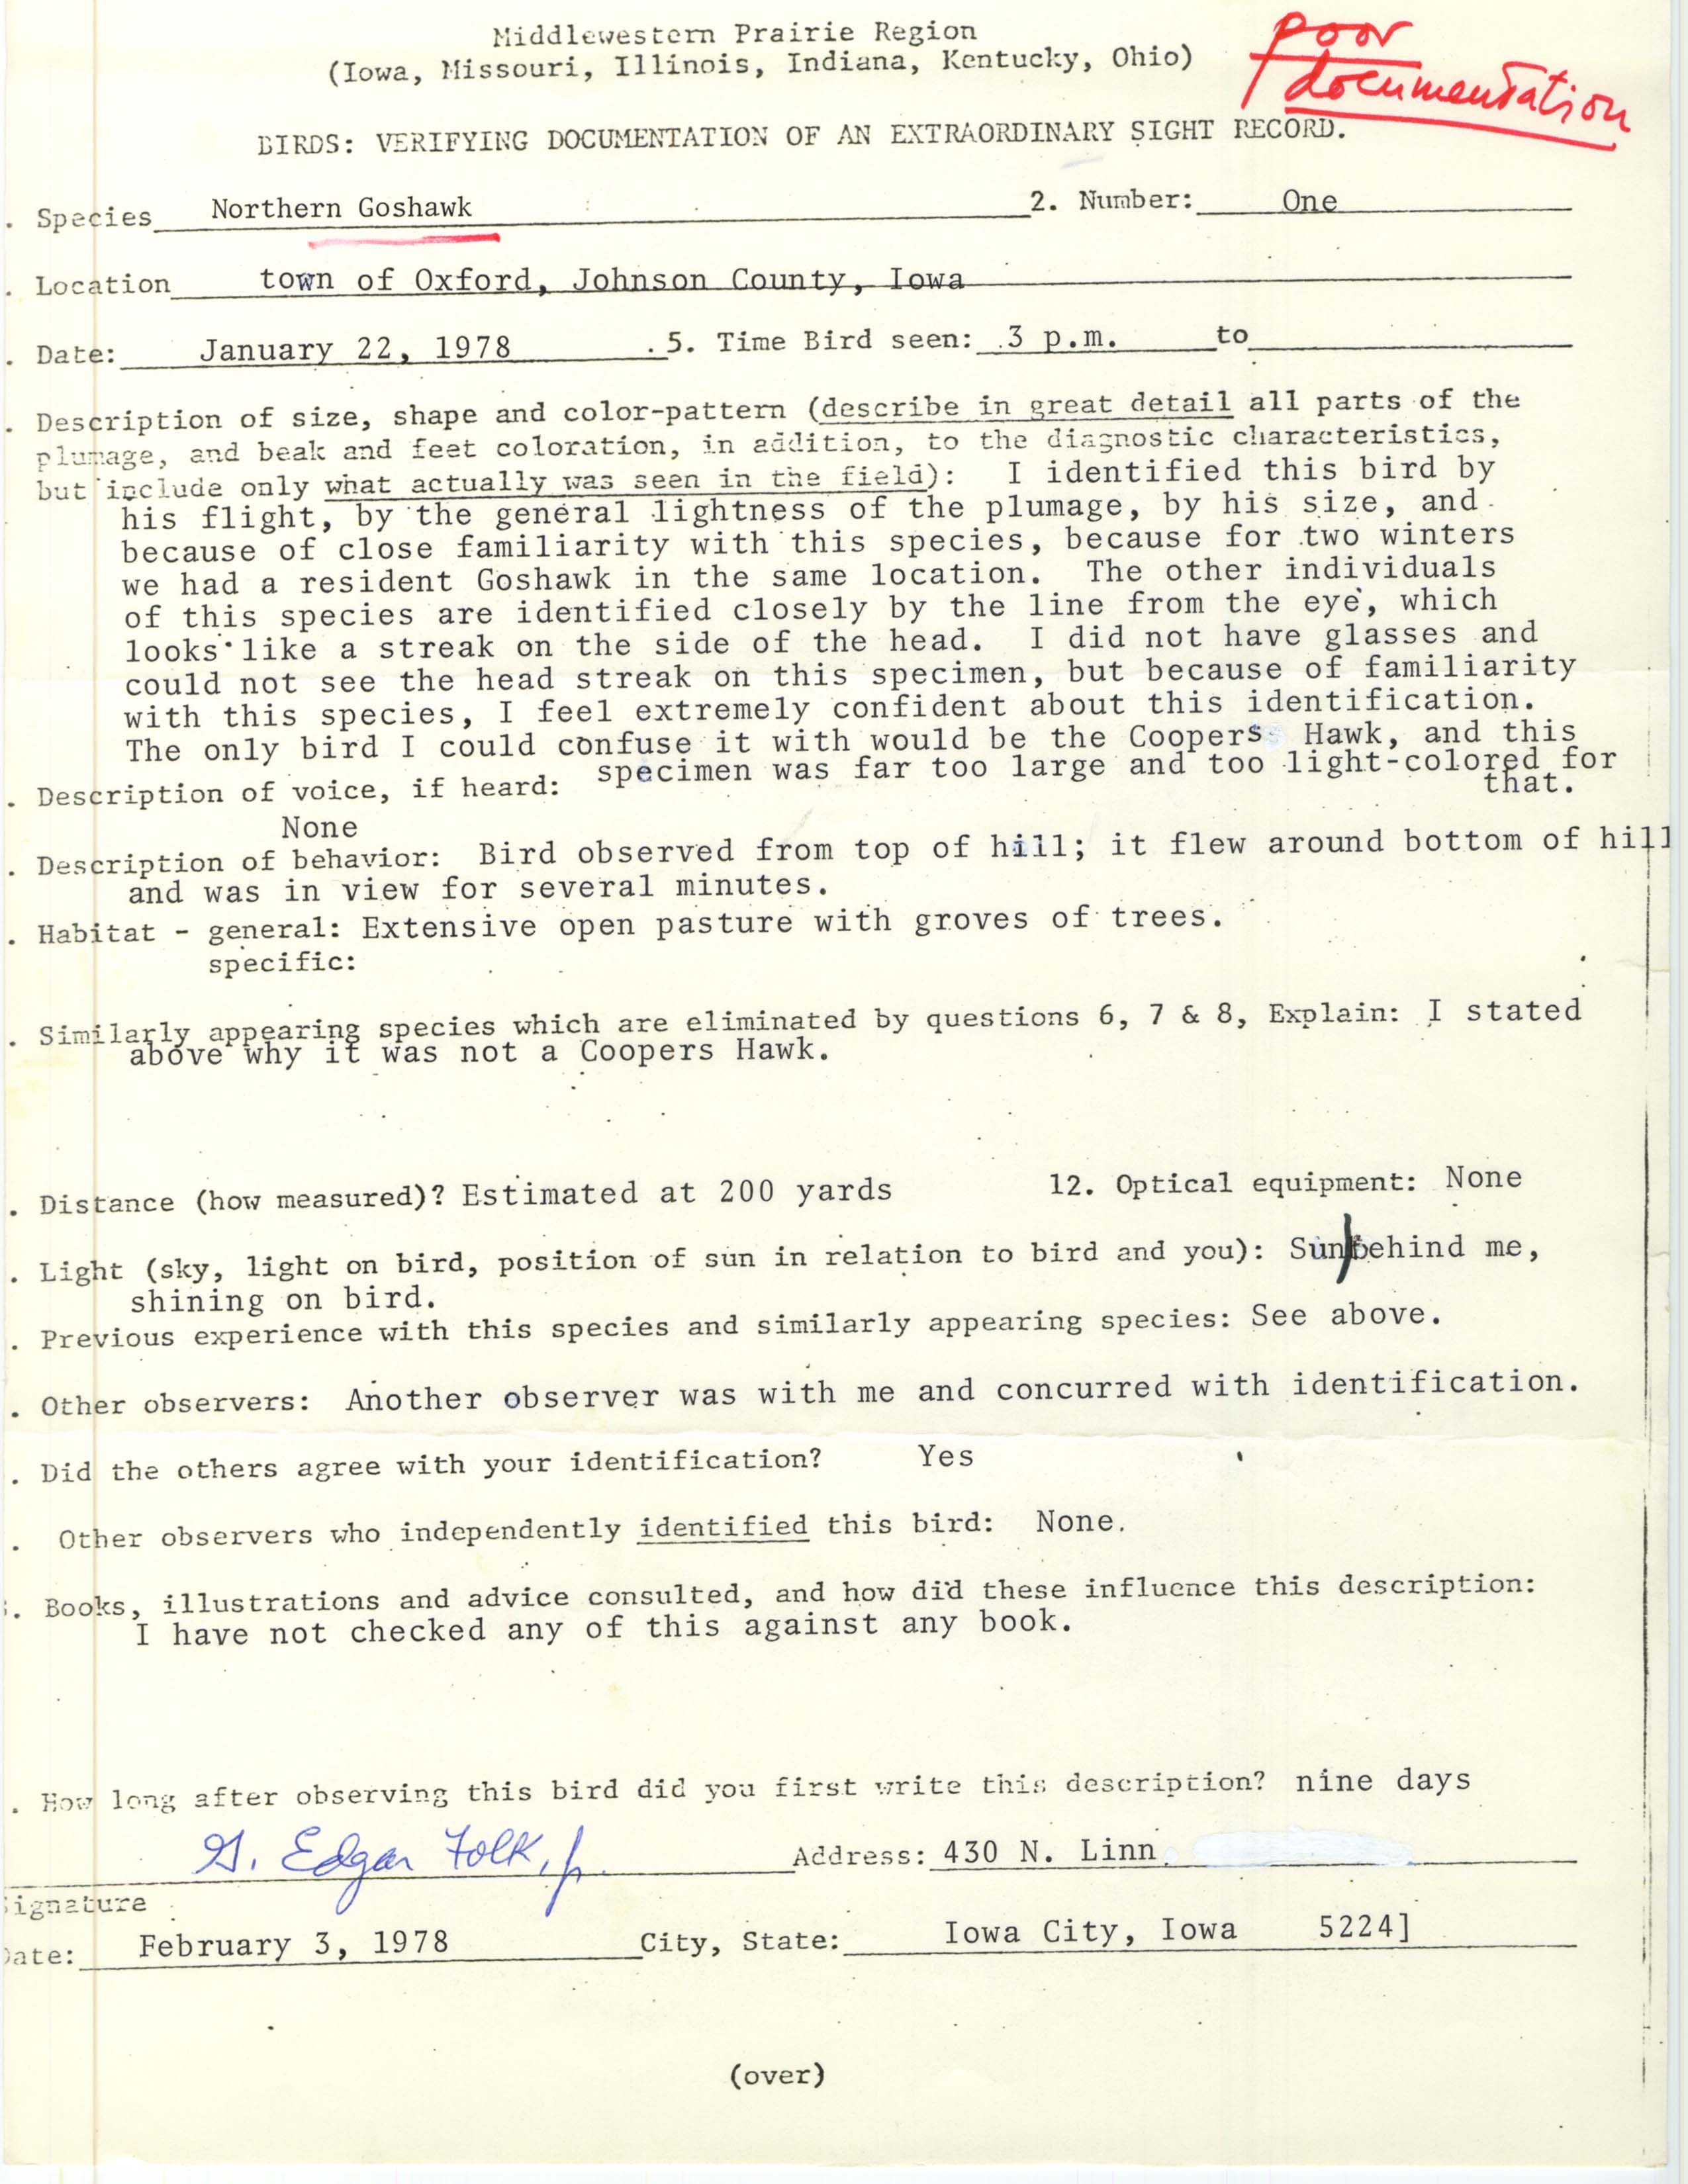 Rare bird documentation form for Northern Goshawk at Oxford, 1978